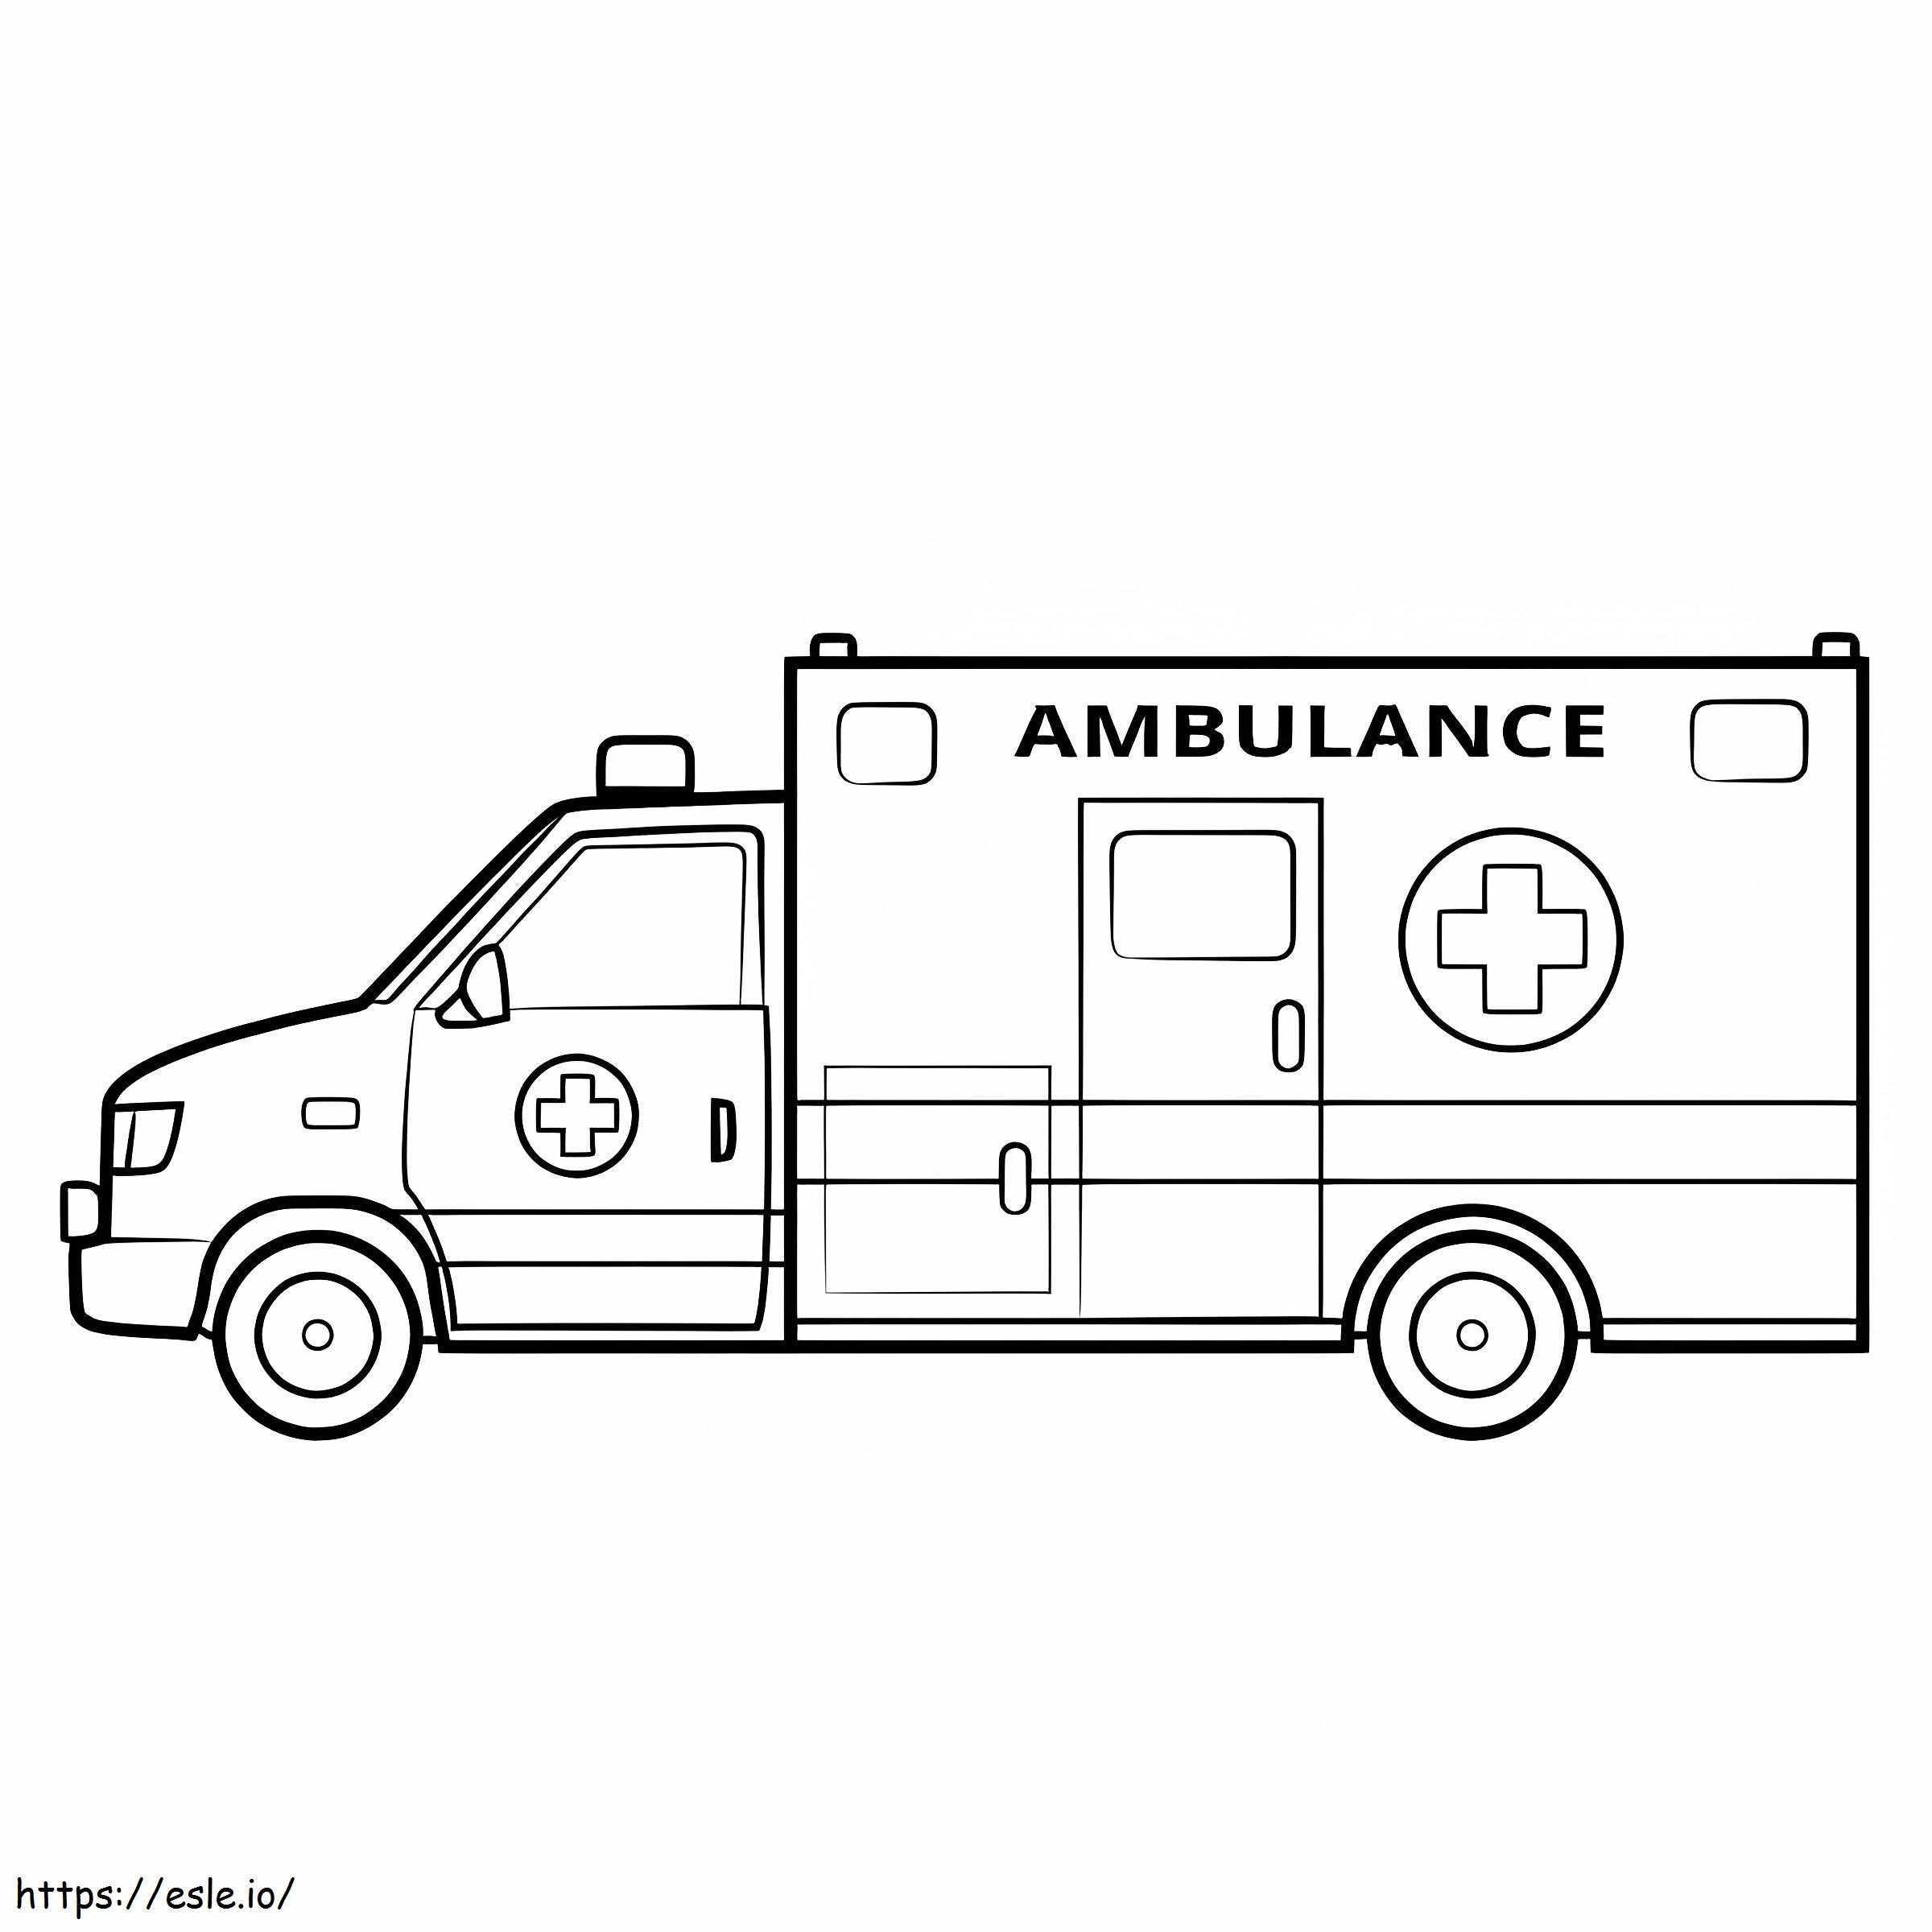 Basic Ambulance coloring page